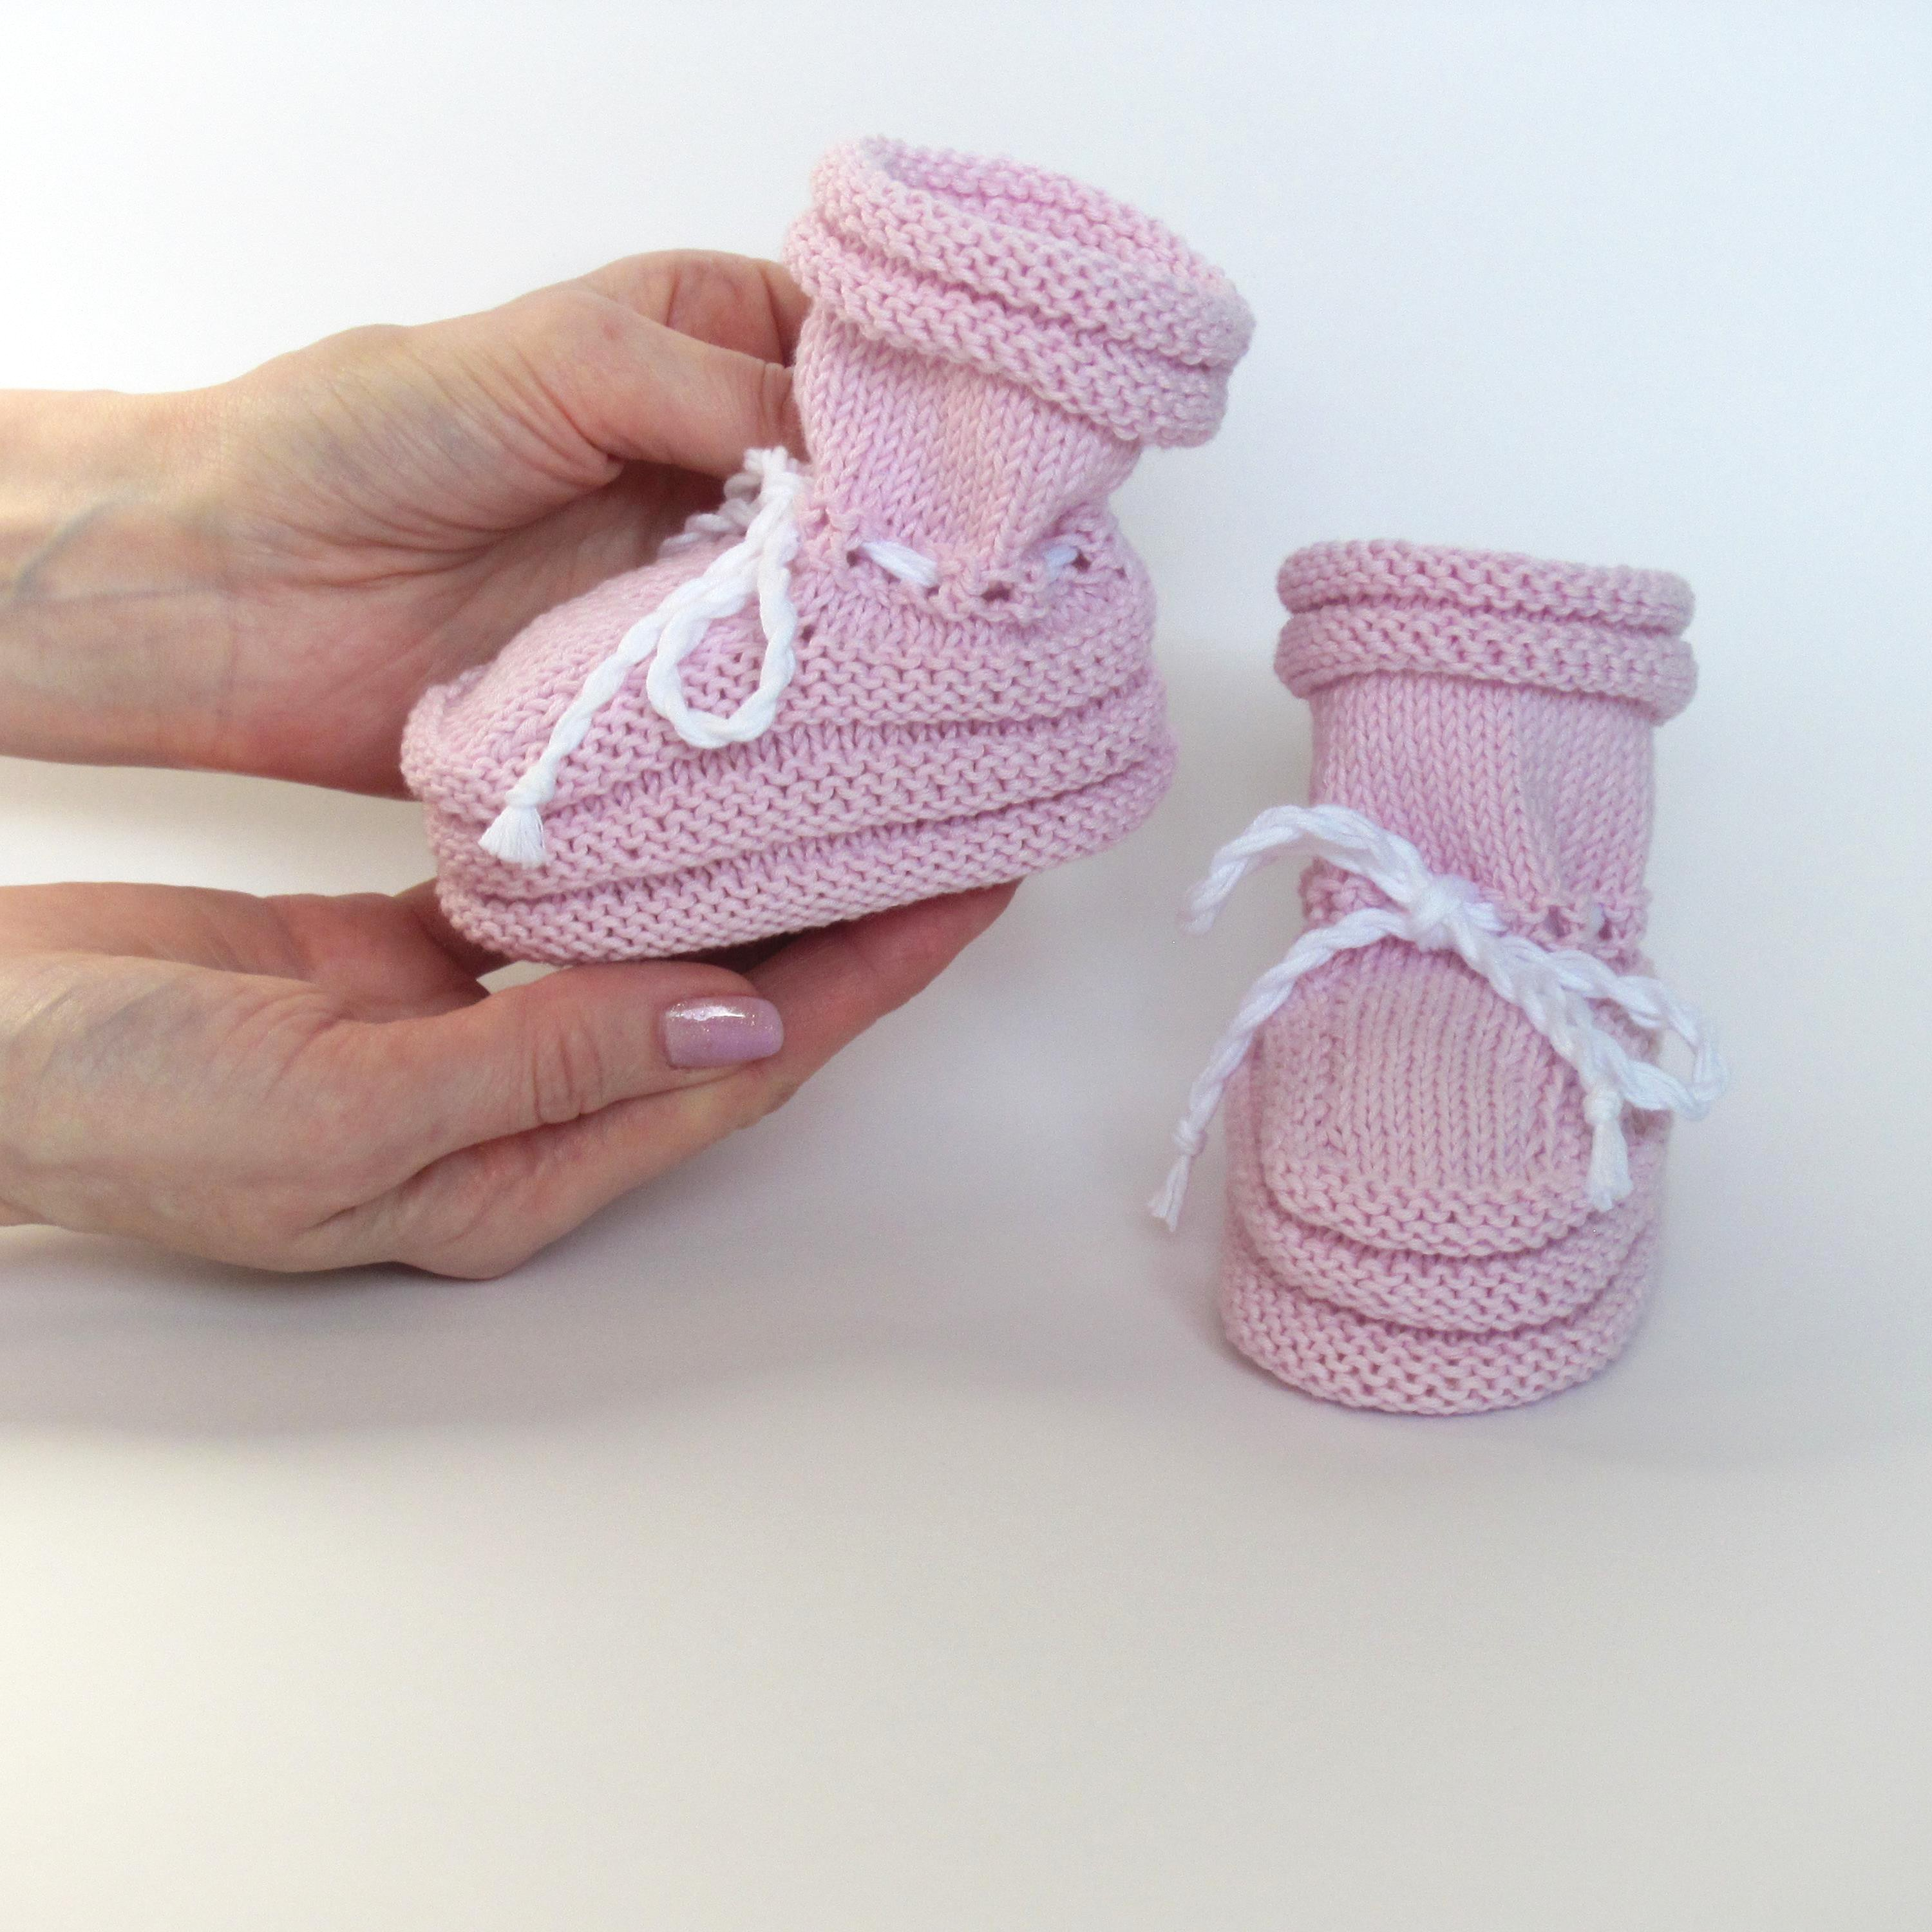 Basic Baby Booties Knitting Pattern Knit Ba Booties Illustrated Knitting Pattern